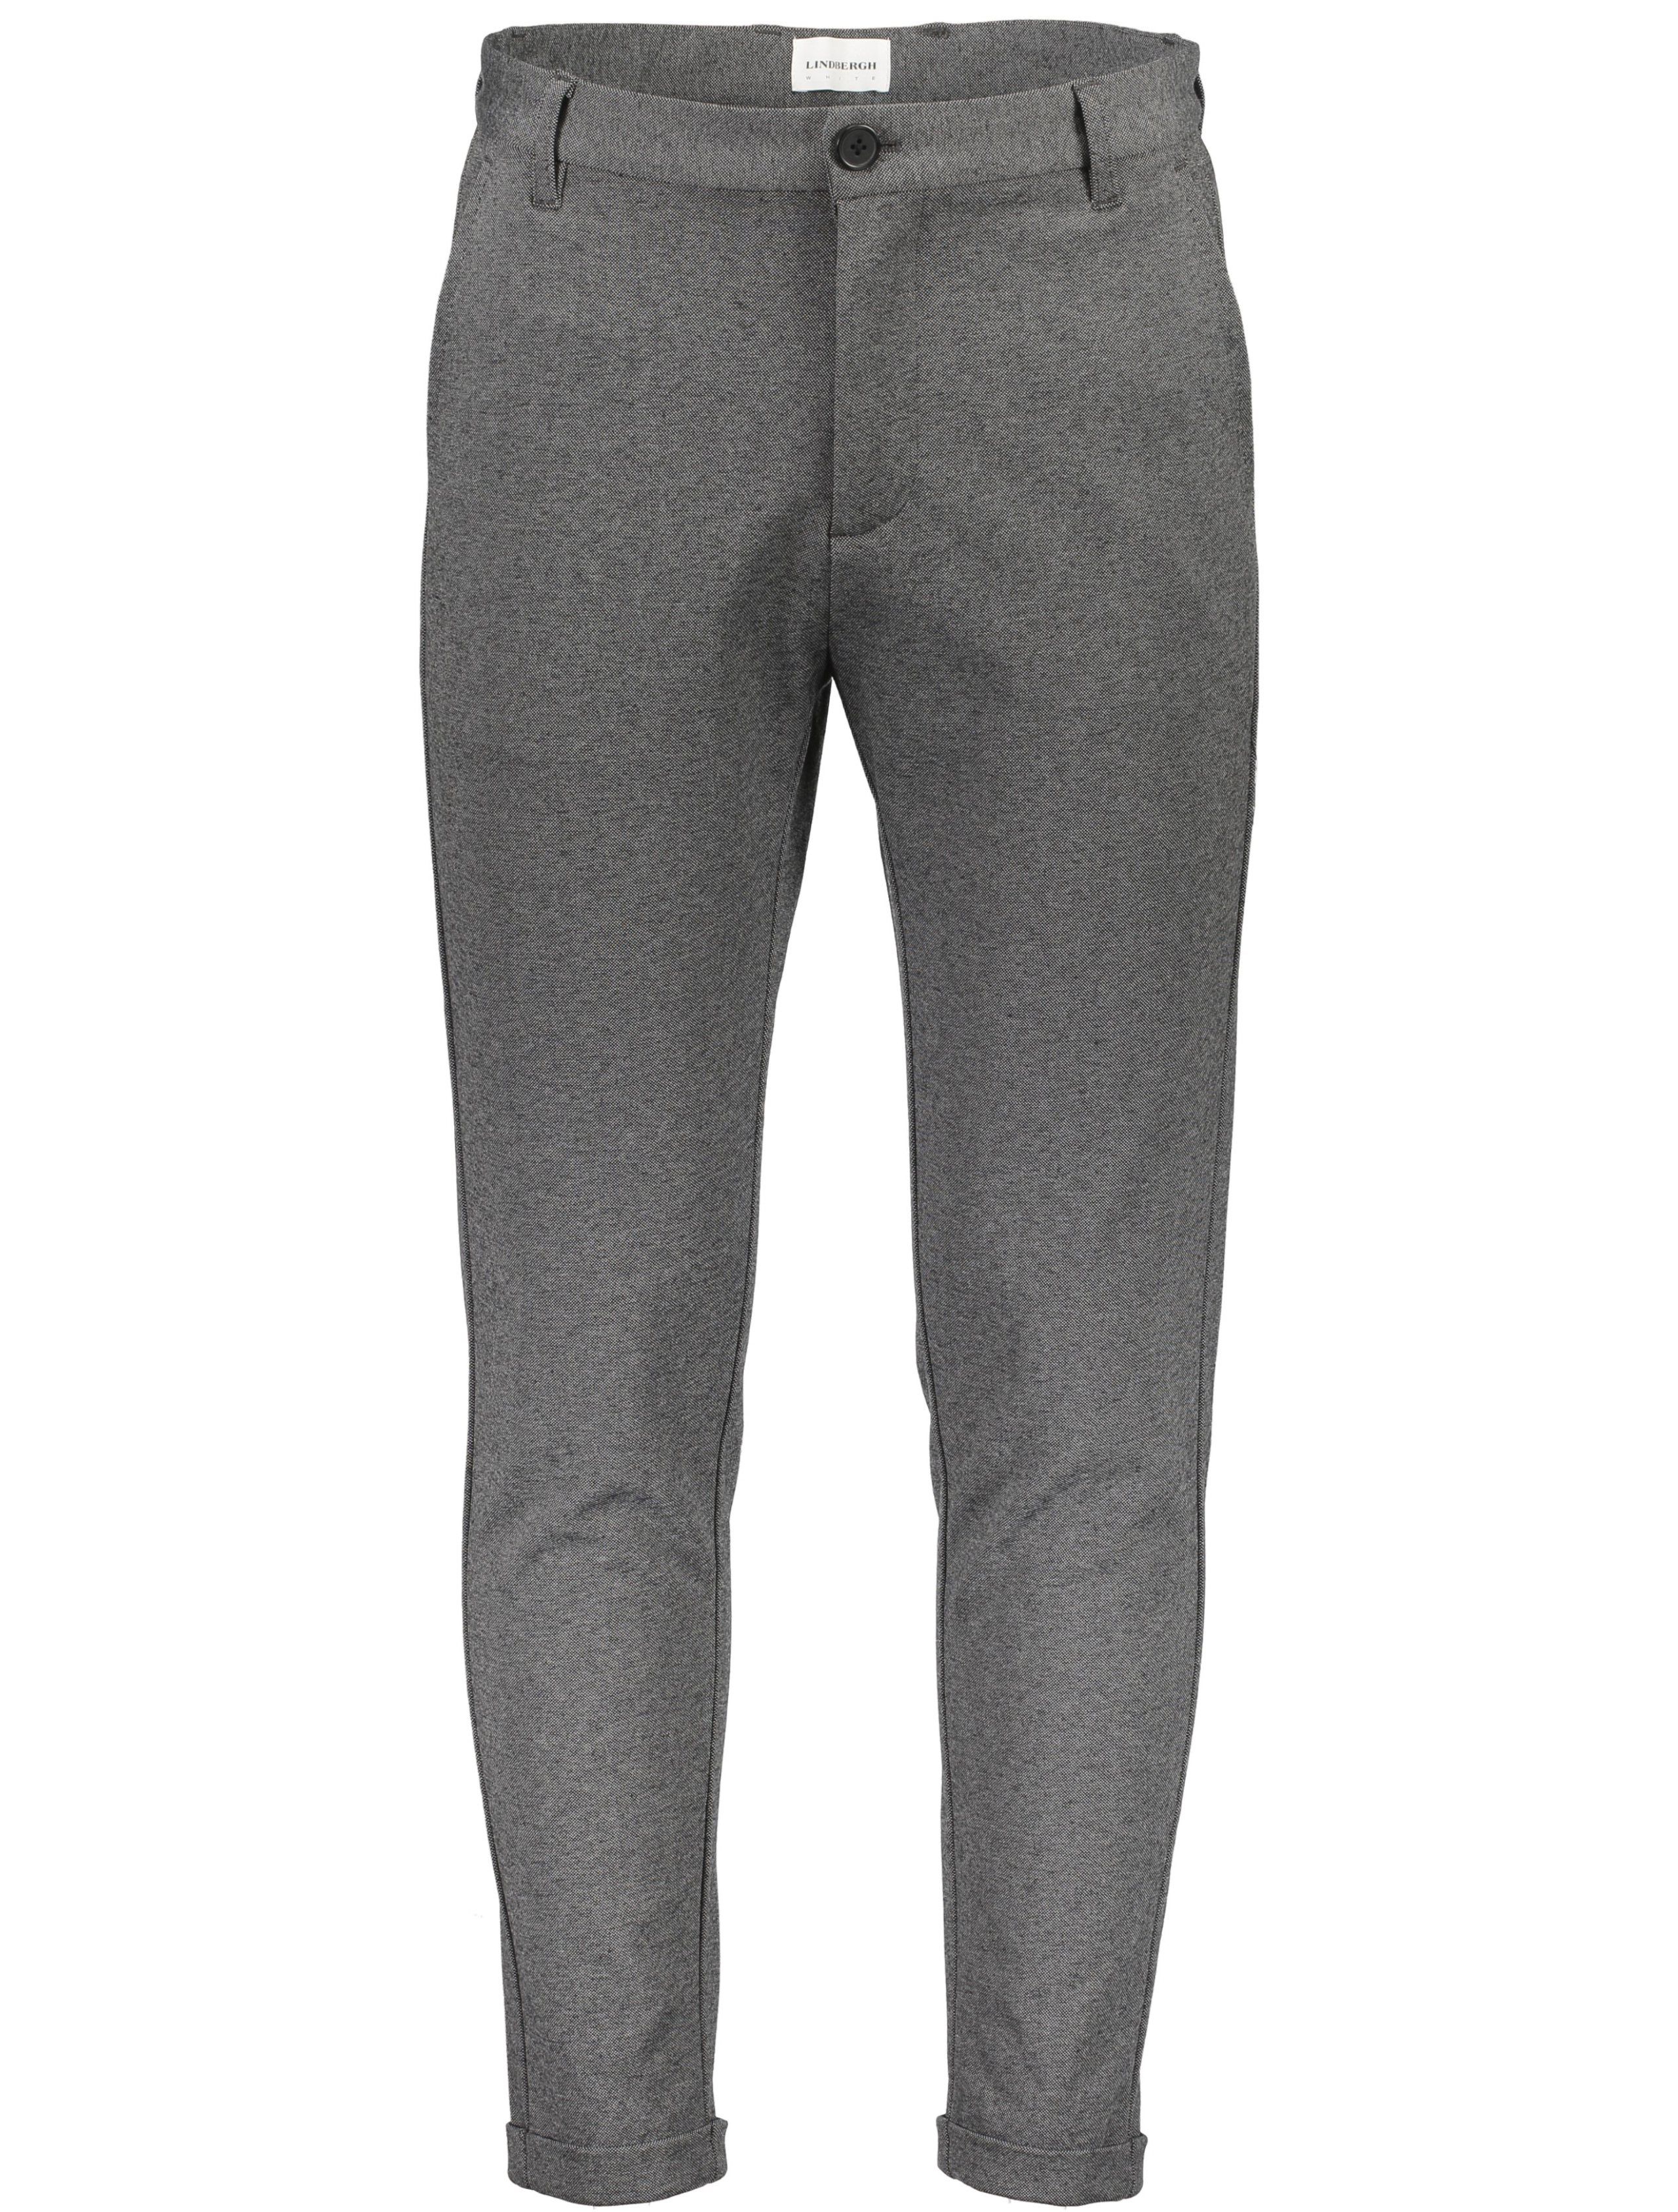 Lindbergh Performance pants grey / grey mix